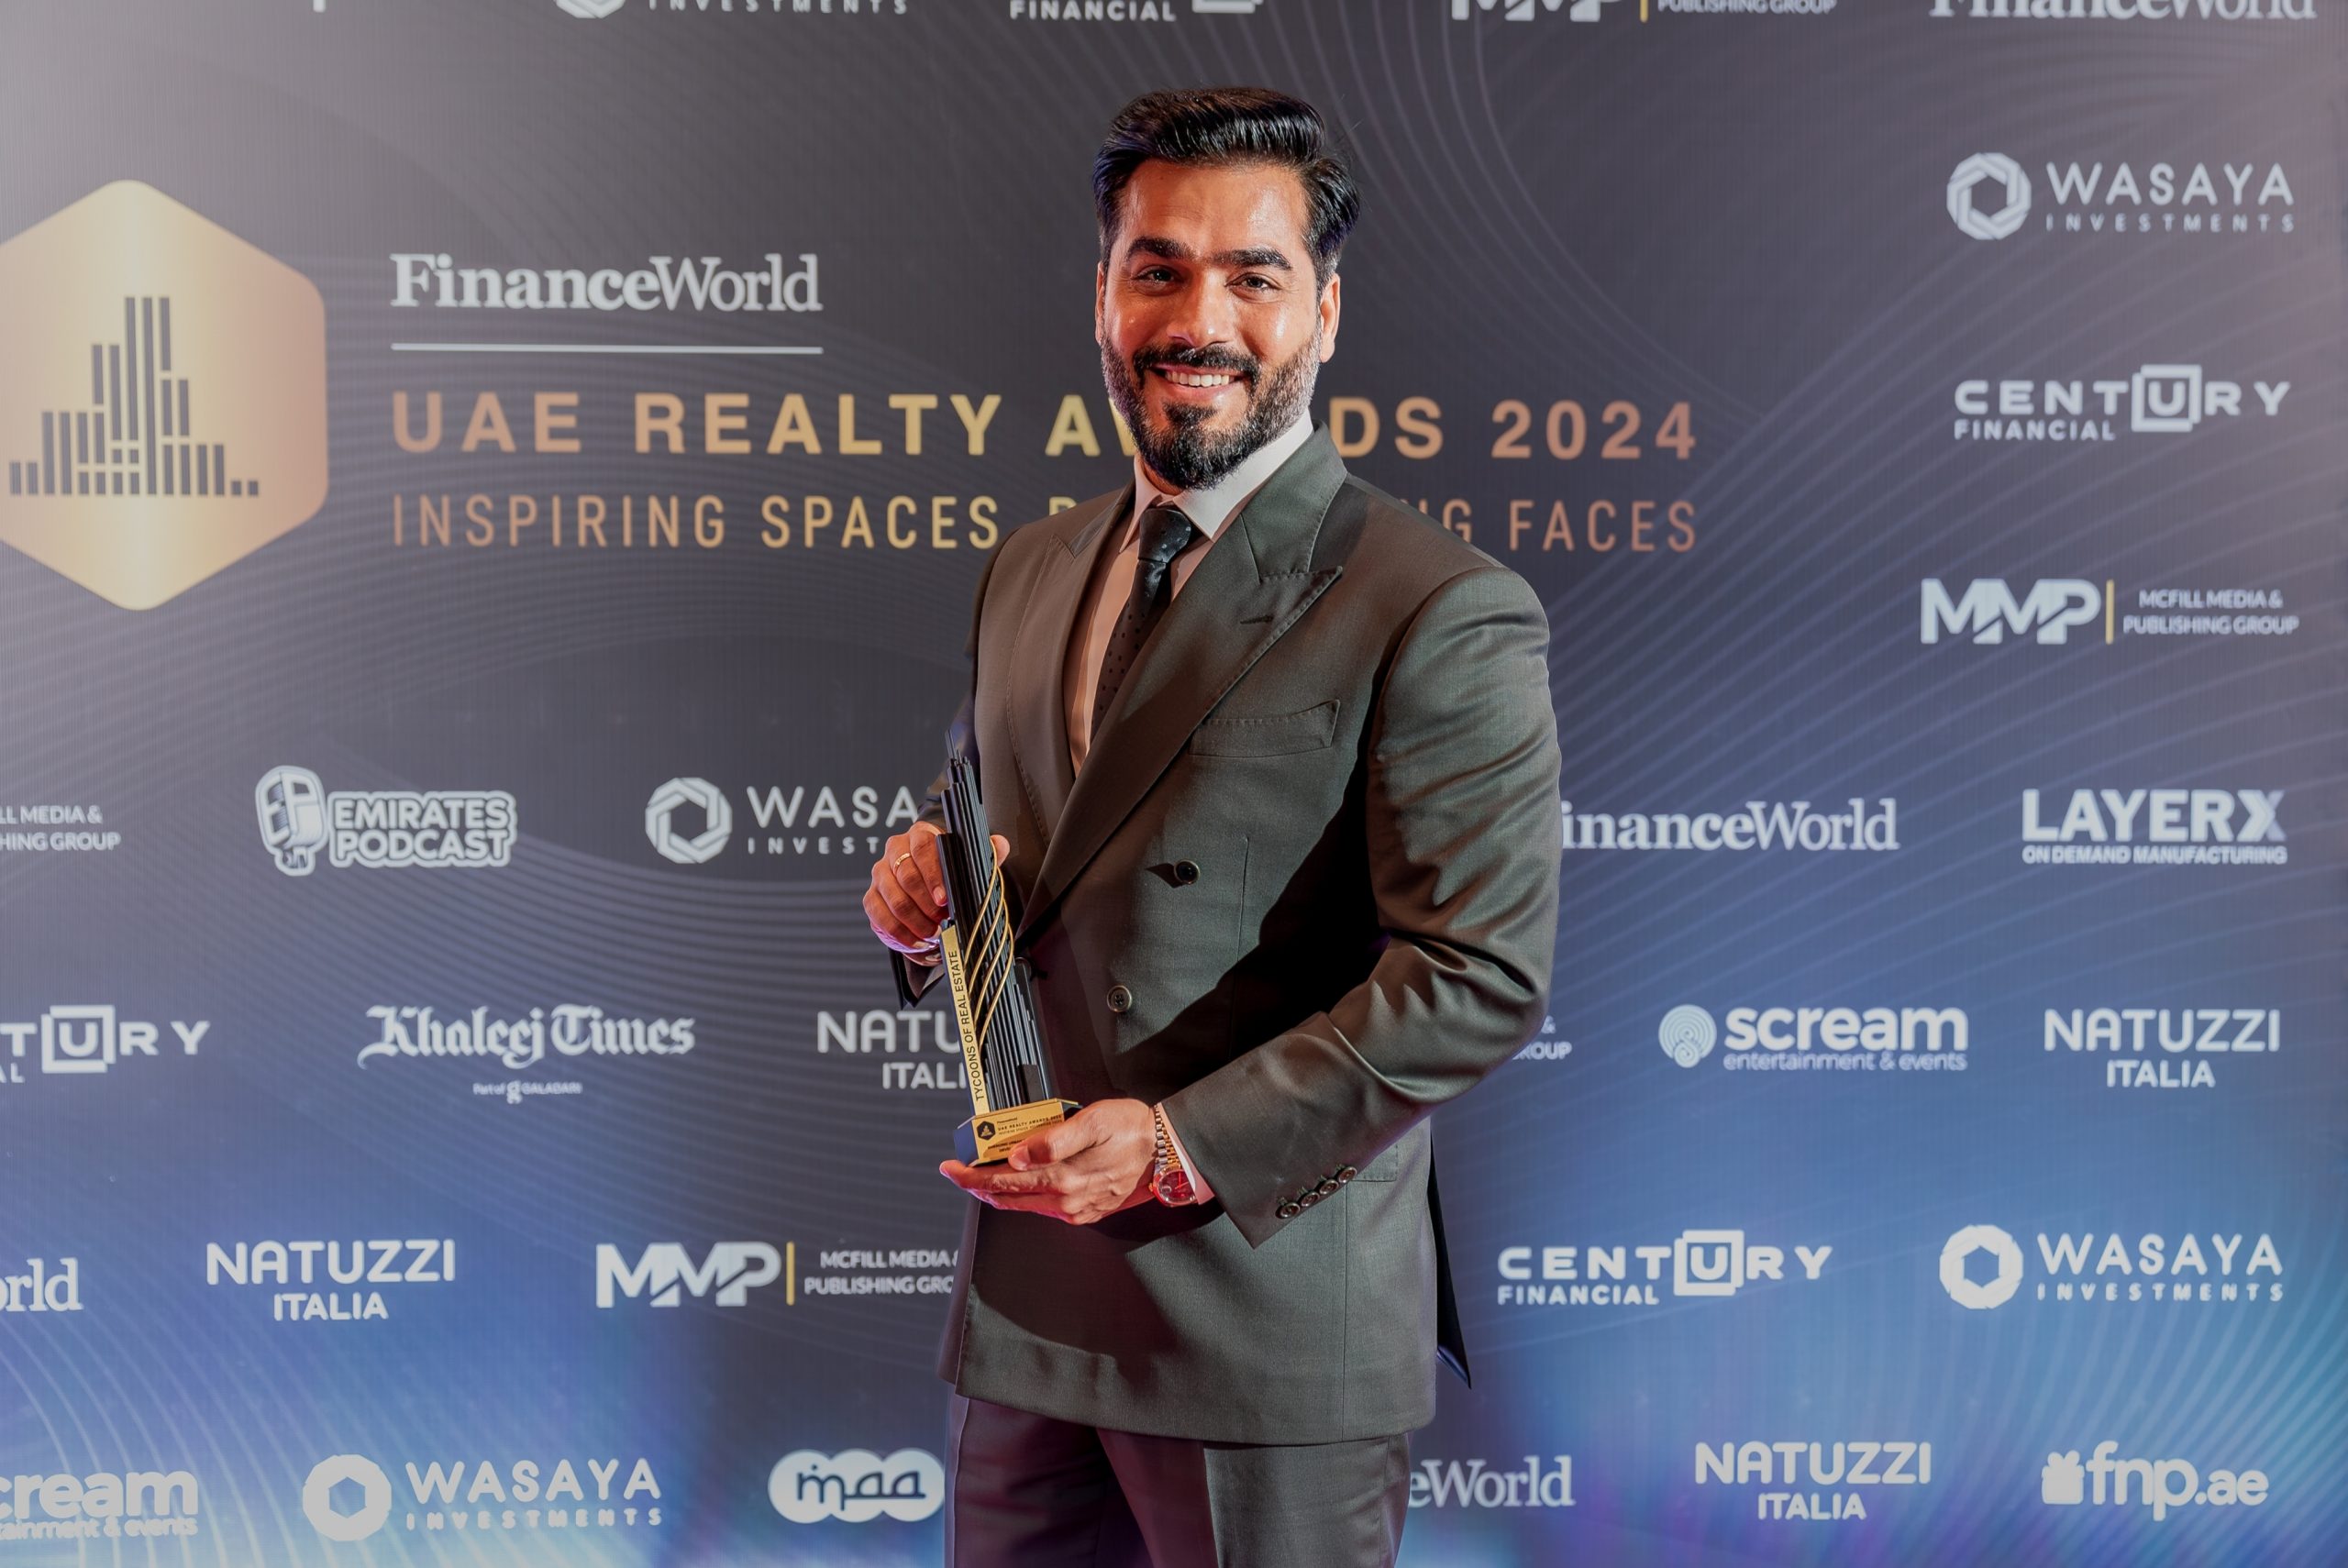 ANAX Developments wins UAE Realty Awards